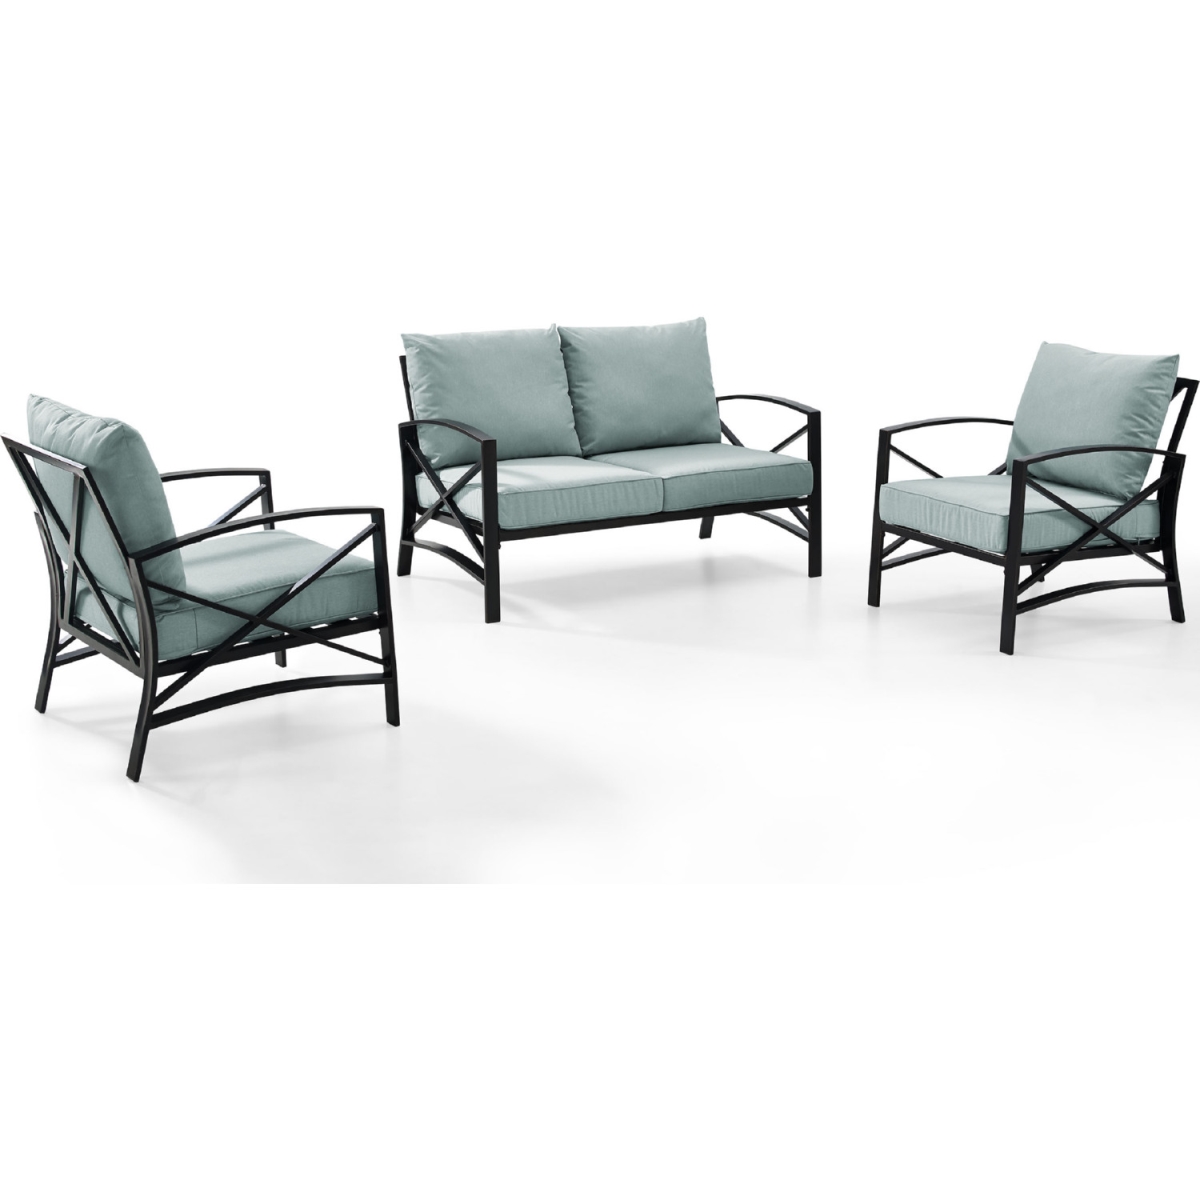 Ko60011bz-mi 3 Piece Kaplan Outdoor Seating Set With Mist Cushion - Loveseat, Two Kaplan Outdoor Chairs